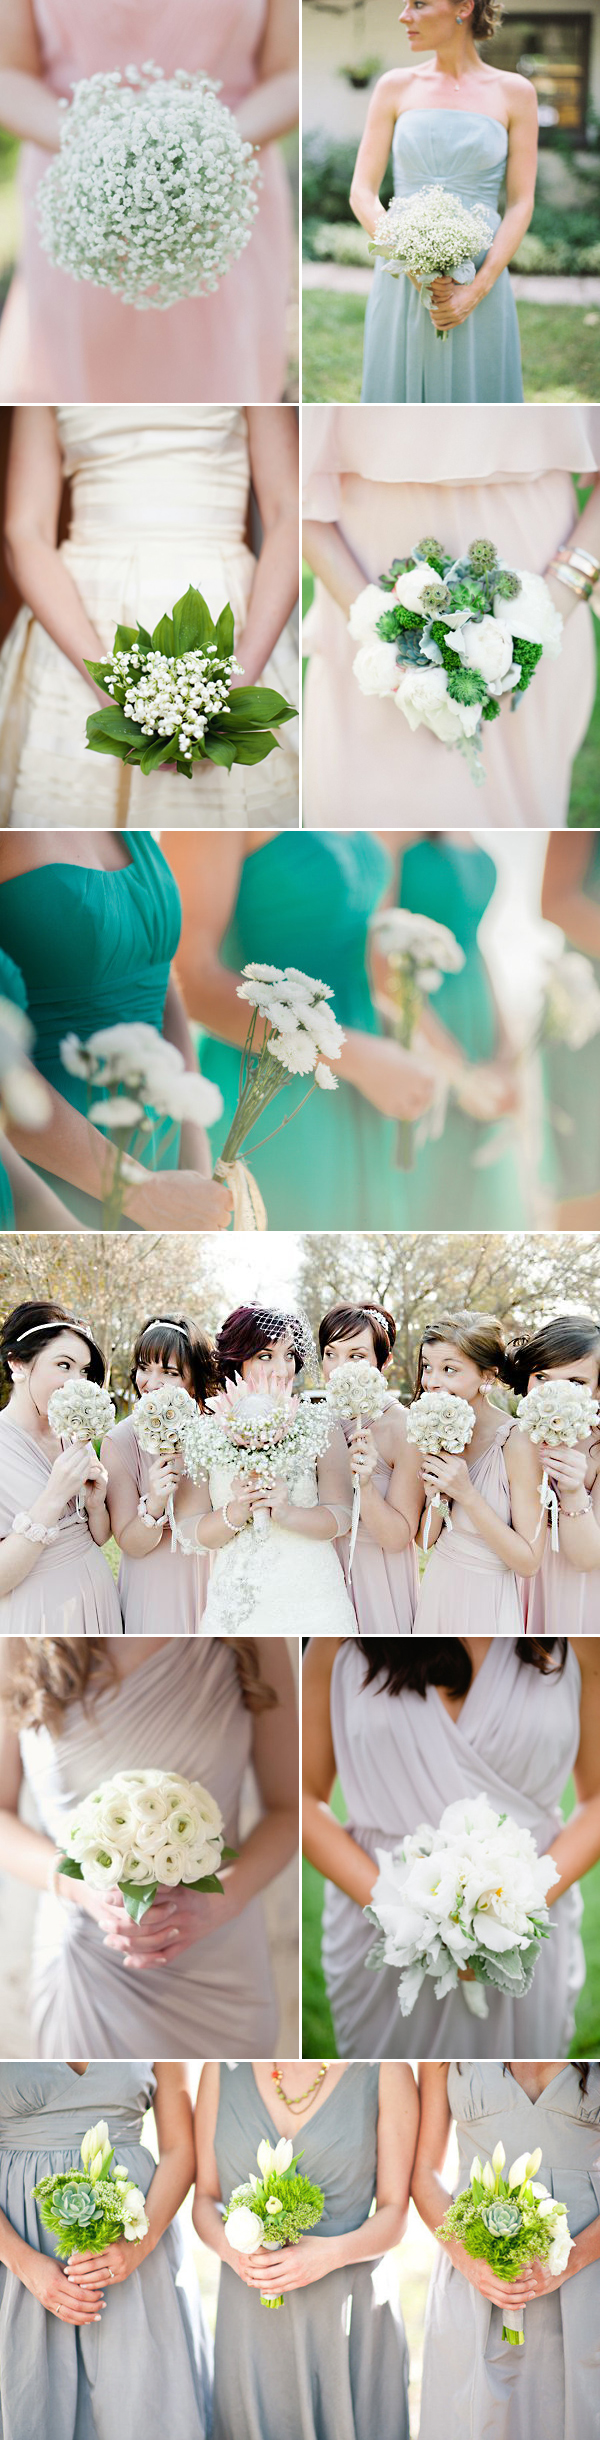 bridesmaid-bouquet02-white